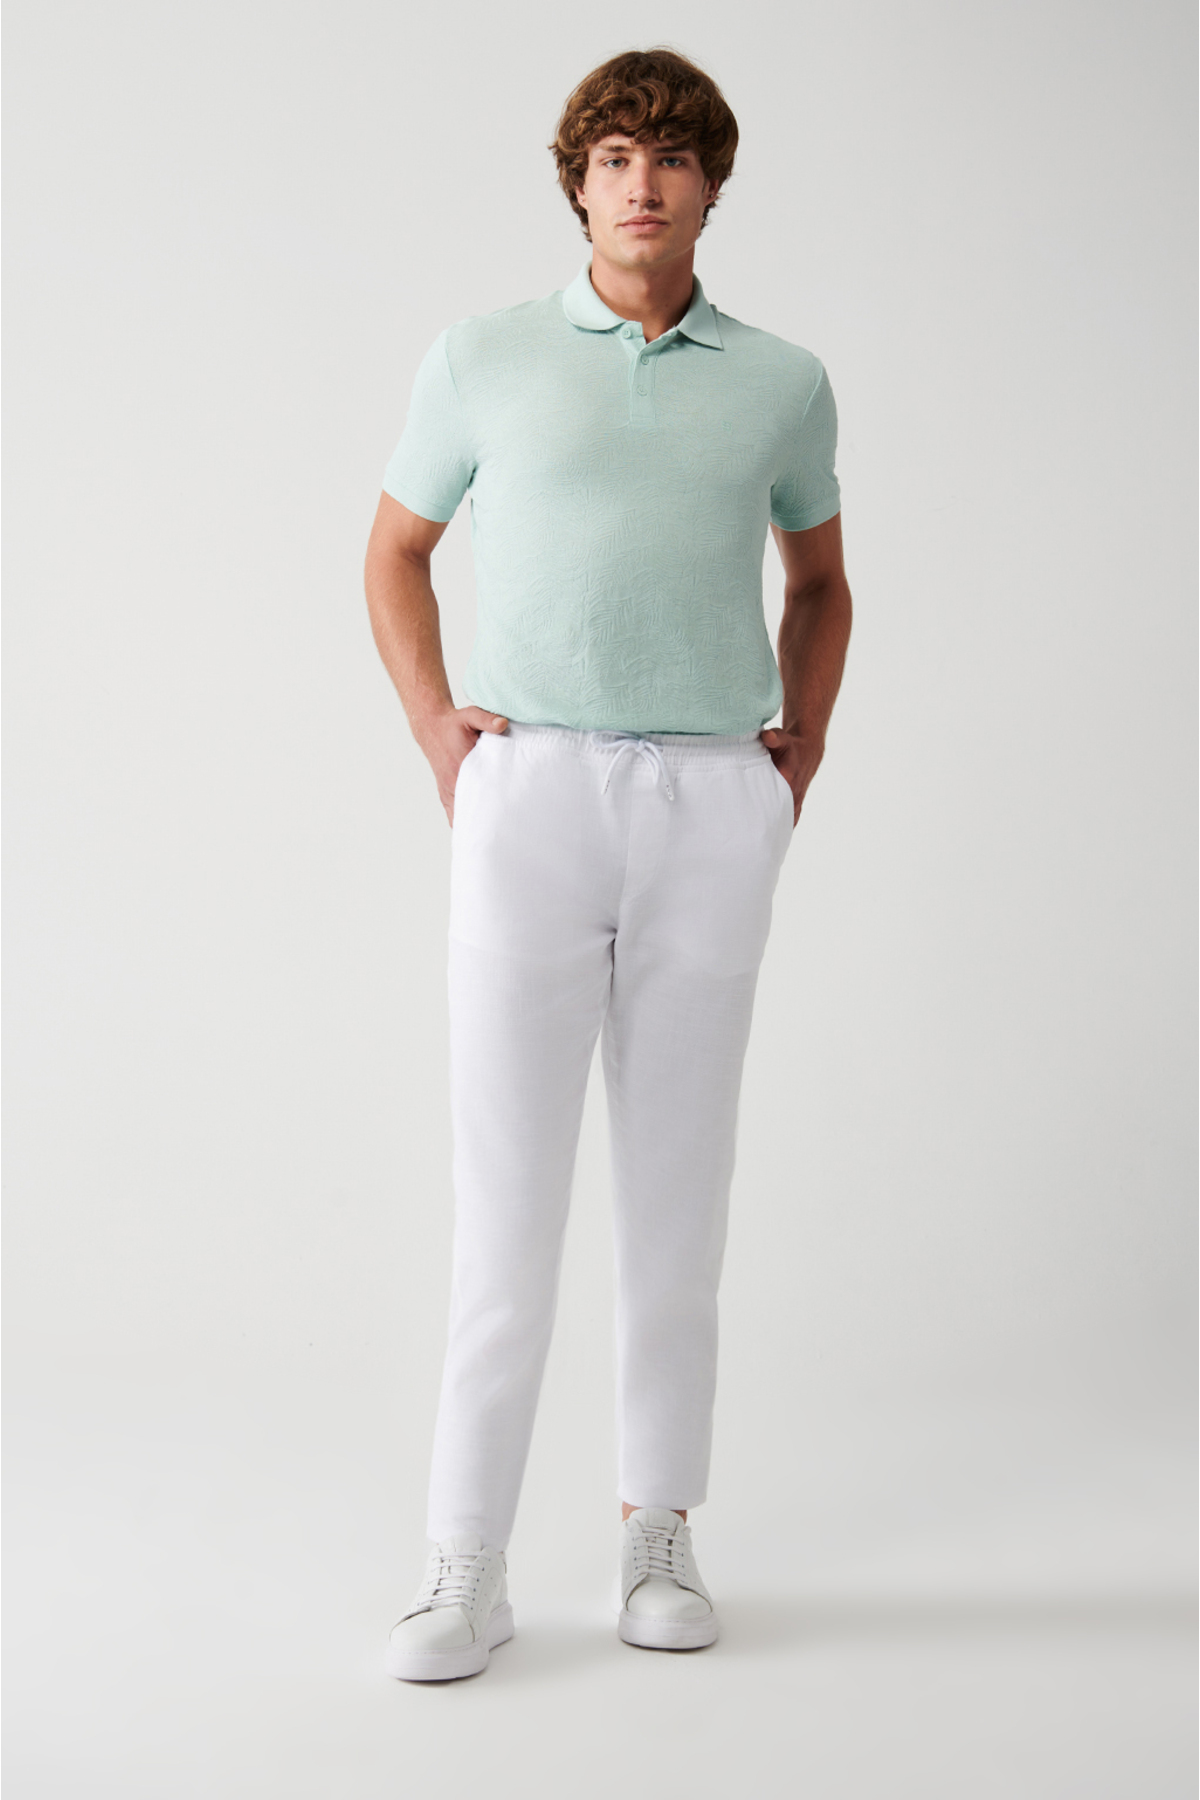 Avva Men's White Side Pocket Elastic Waist Linen Textured Relaxed Fit Comfortable Cut Trousers